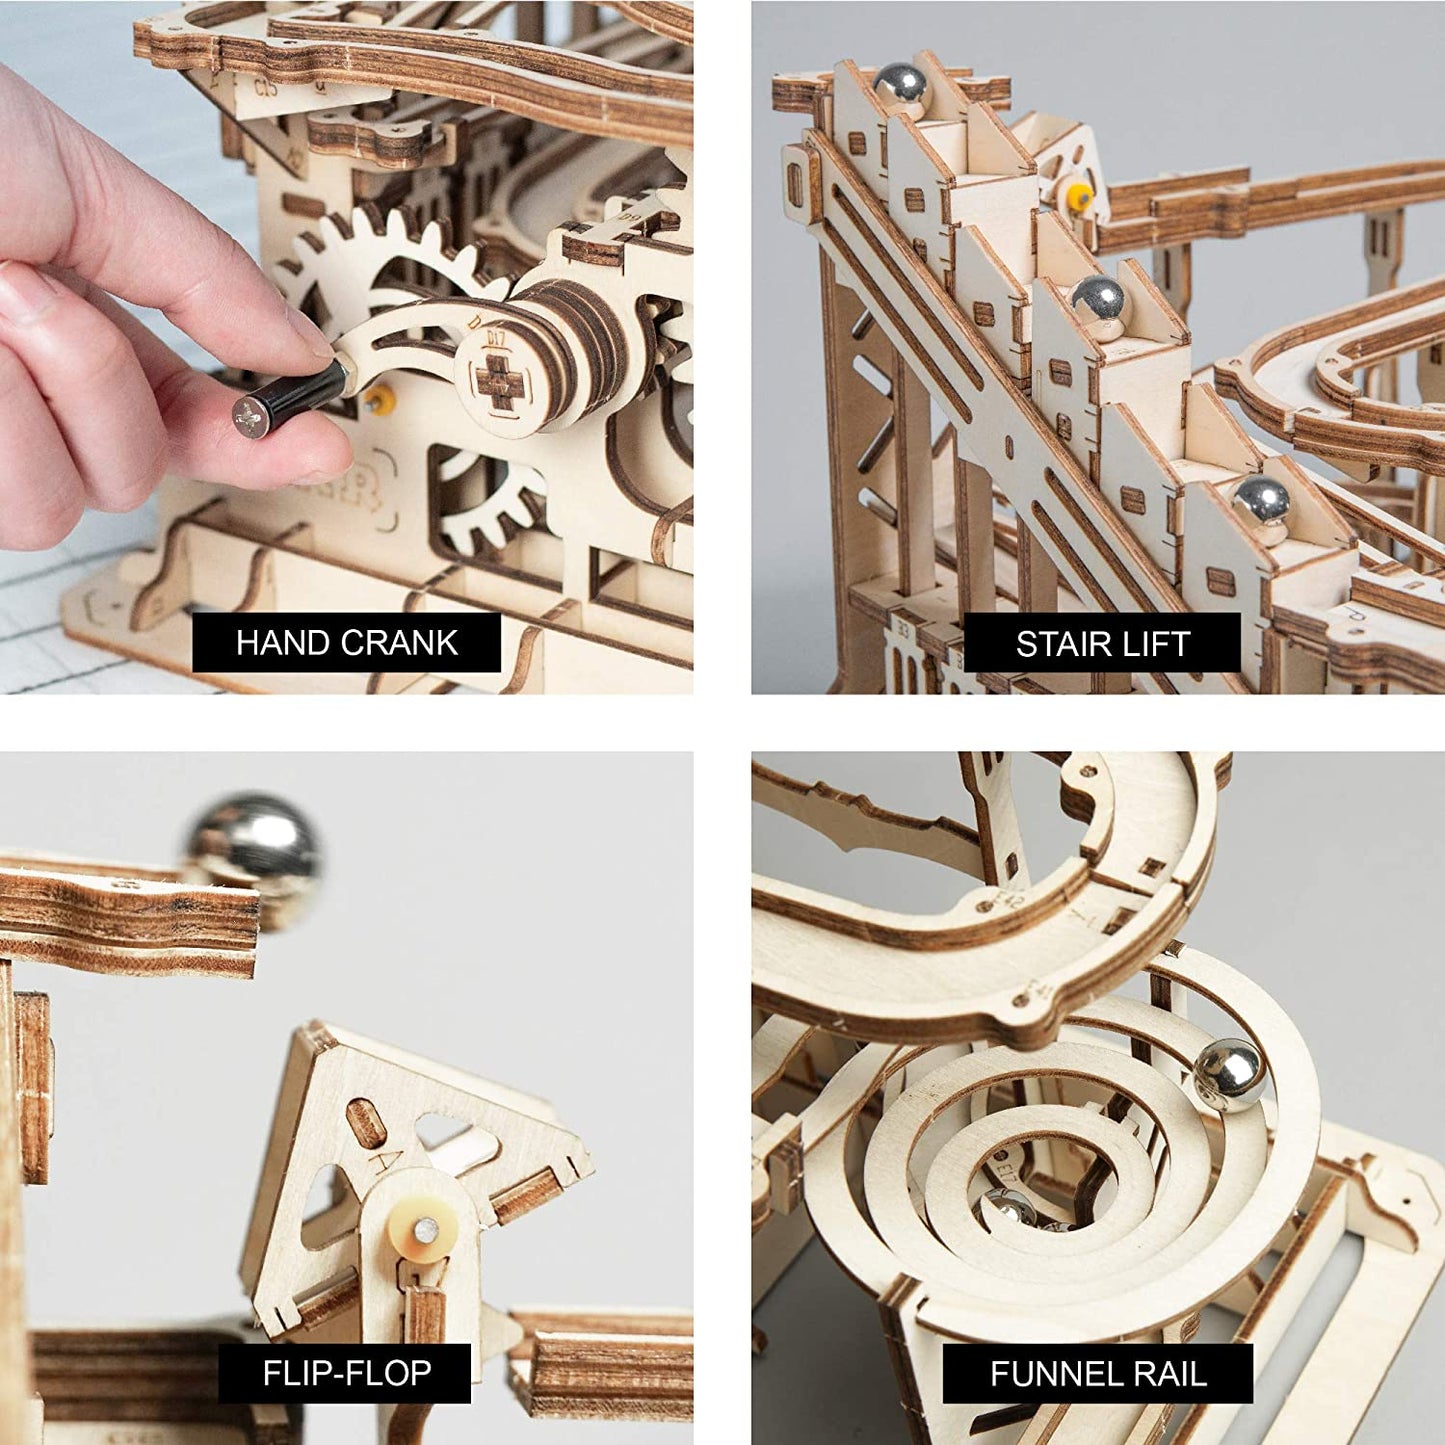 DIY Wooden Marble Run with Waterwheel Model Building Kit by Robotime Rokr - 238pcs - ToylandEU